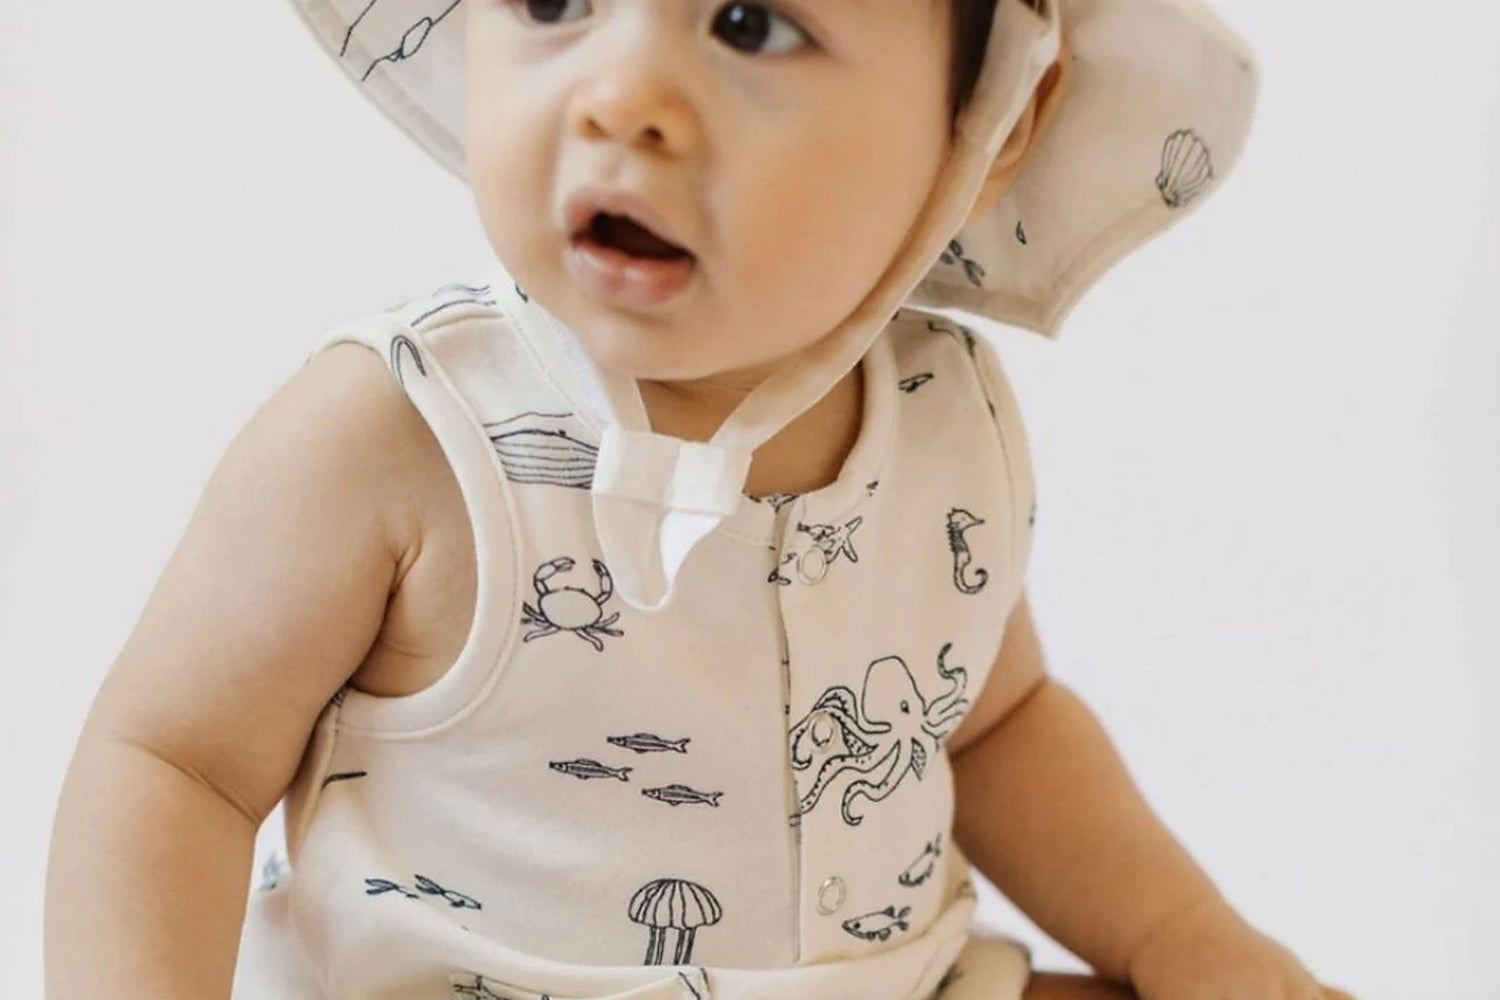 baby wearing pehr life aquatic apparel and looking surprised